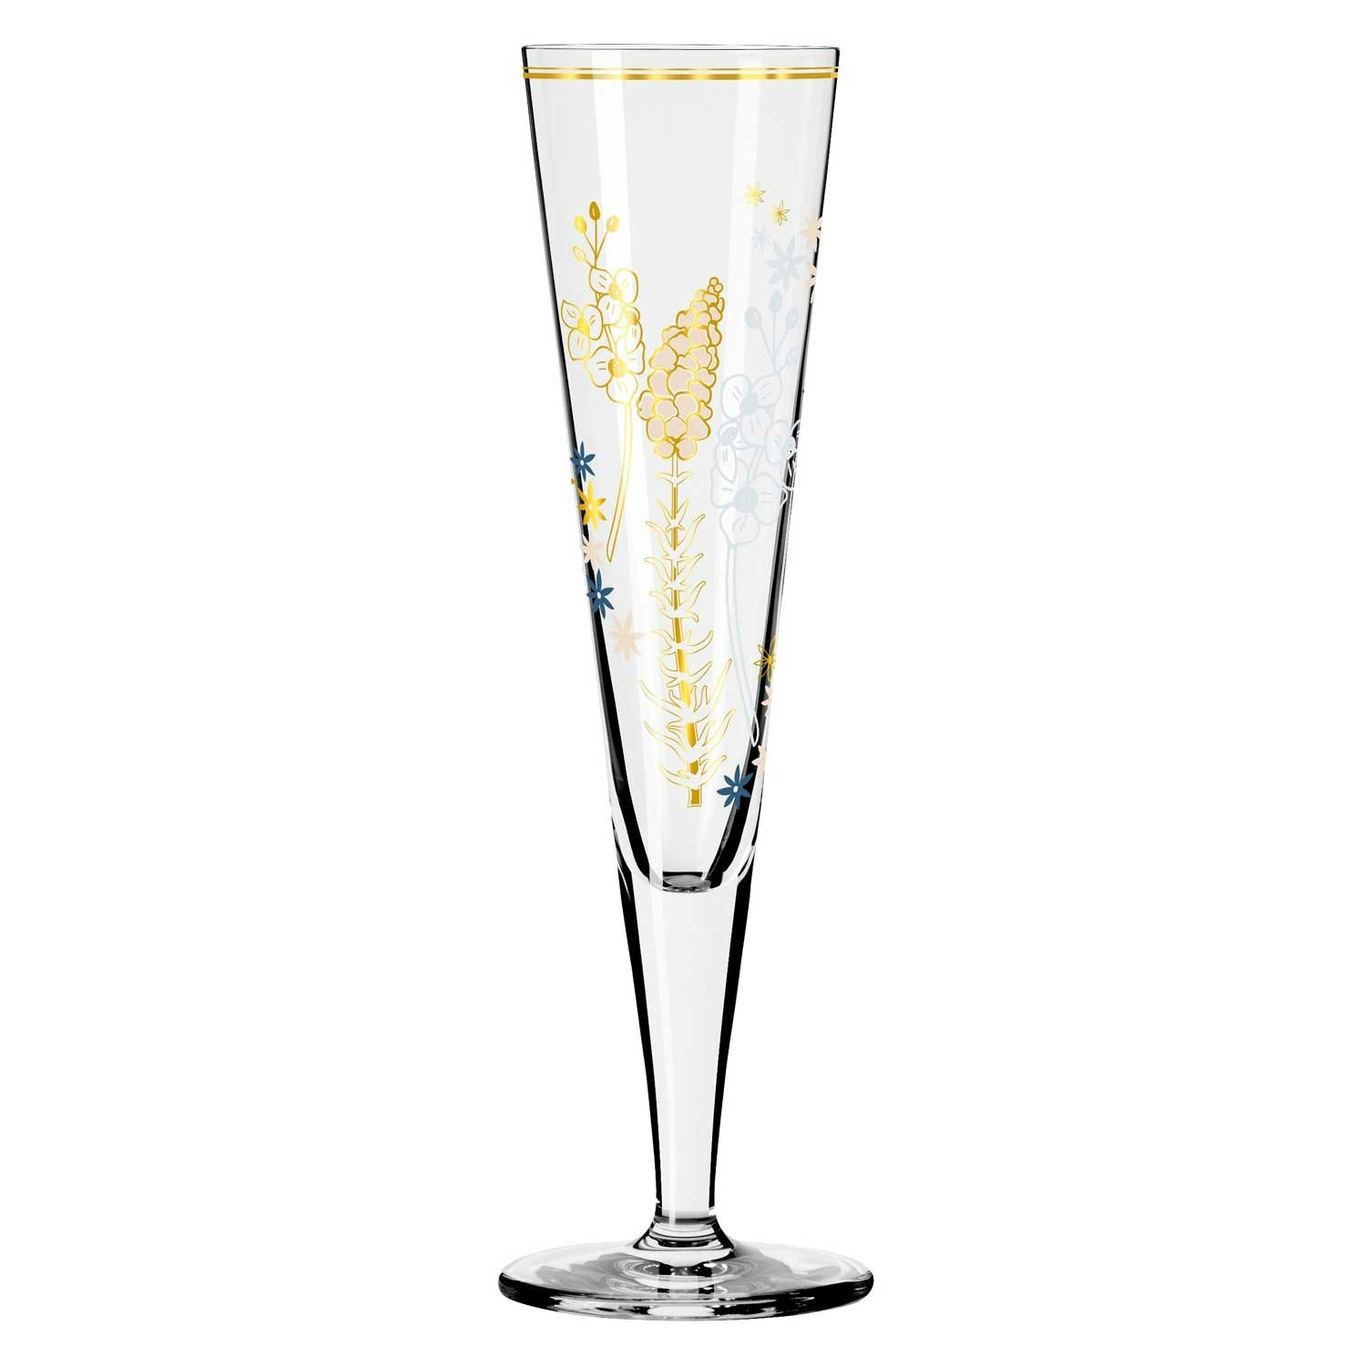 Goldnacht Champagnerglas, NO: 37